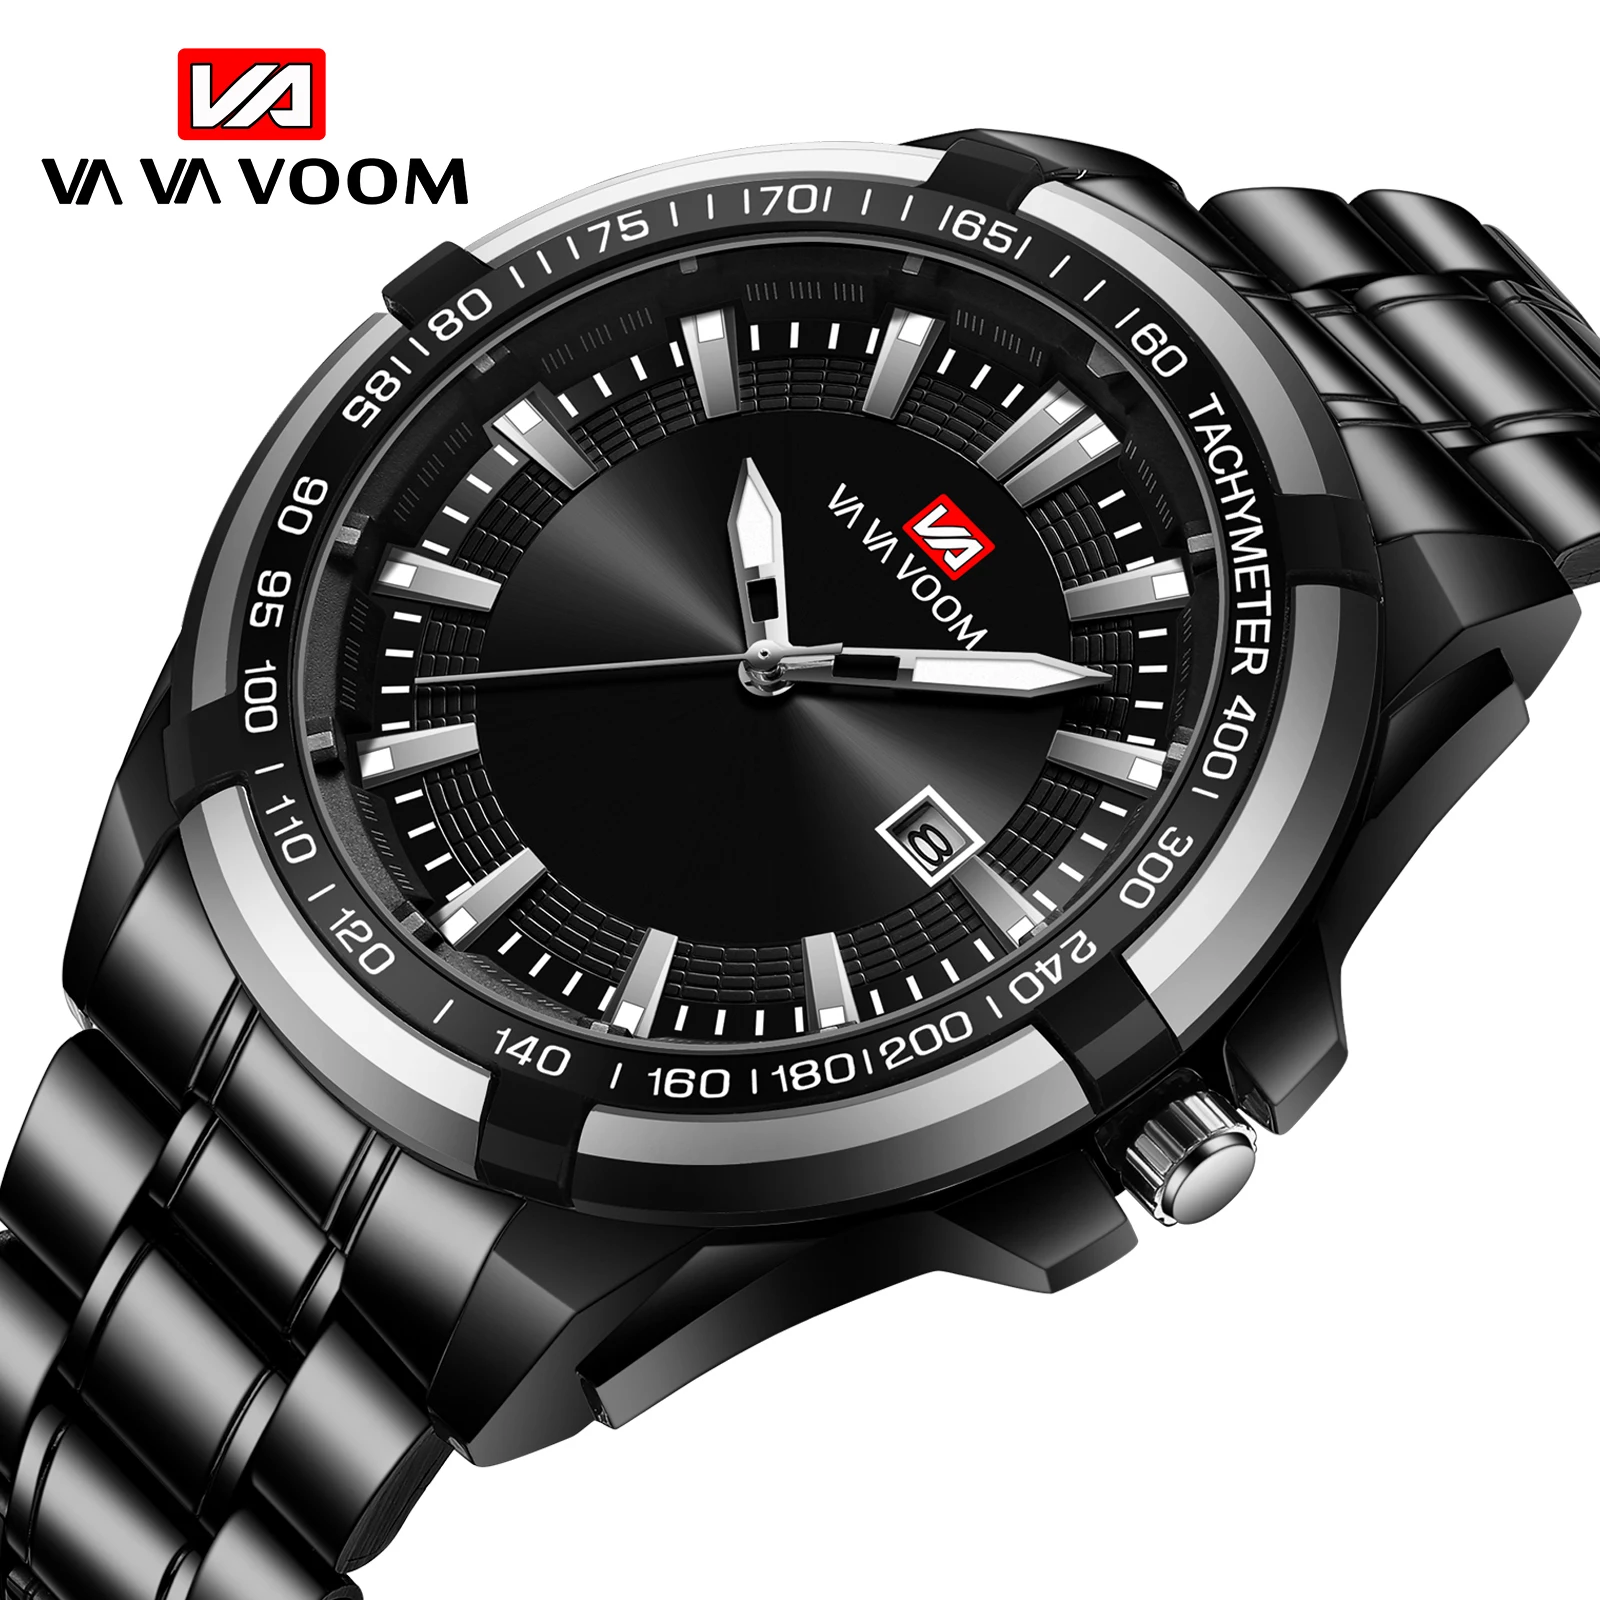 

VAVA VOOM Luxury Business Military Quartz Watch Stainless steel Band Men Watches Date Calendar Male Clock Relogio Direct sales